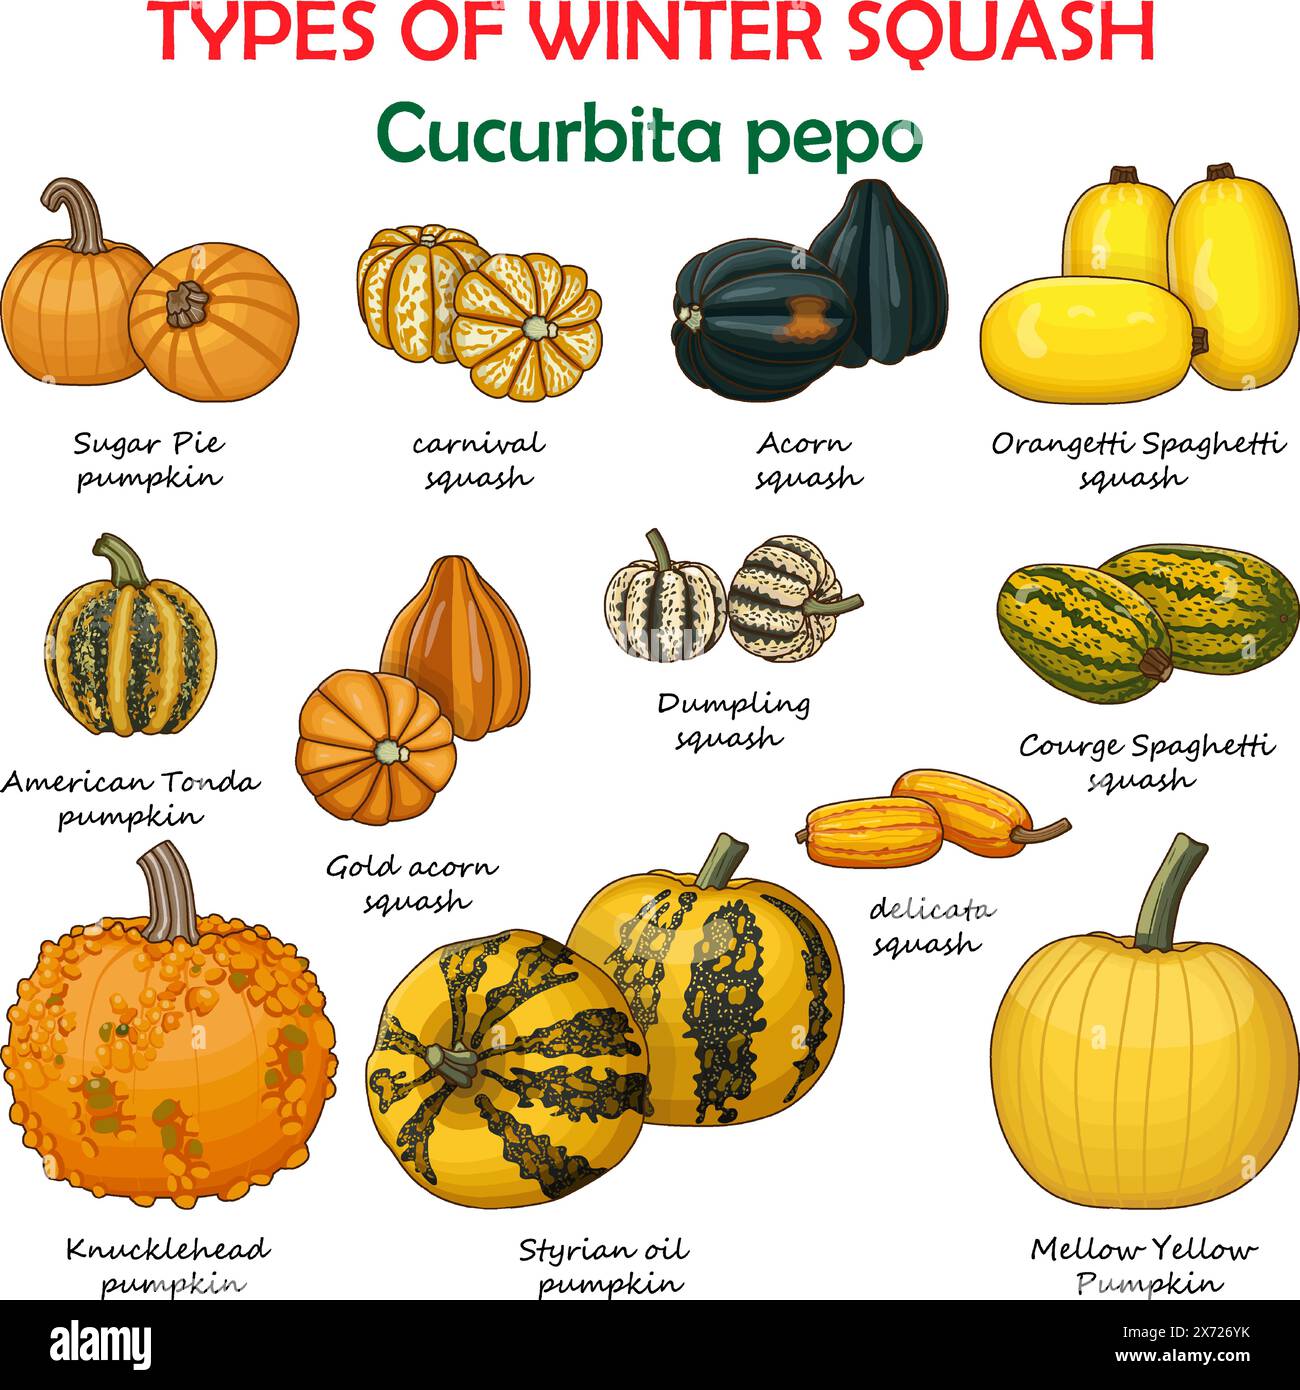 Types of winter squash. Cucurbita pepo. Cucurbitaceae. Fruits and vegetables. Isolated vector illustration. Clipart. Stock Vector